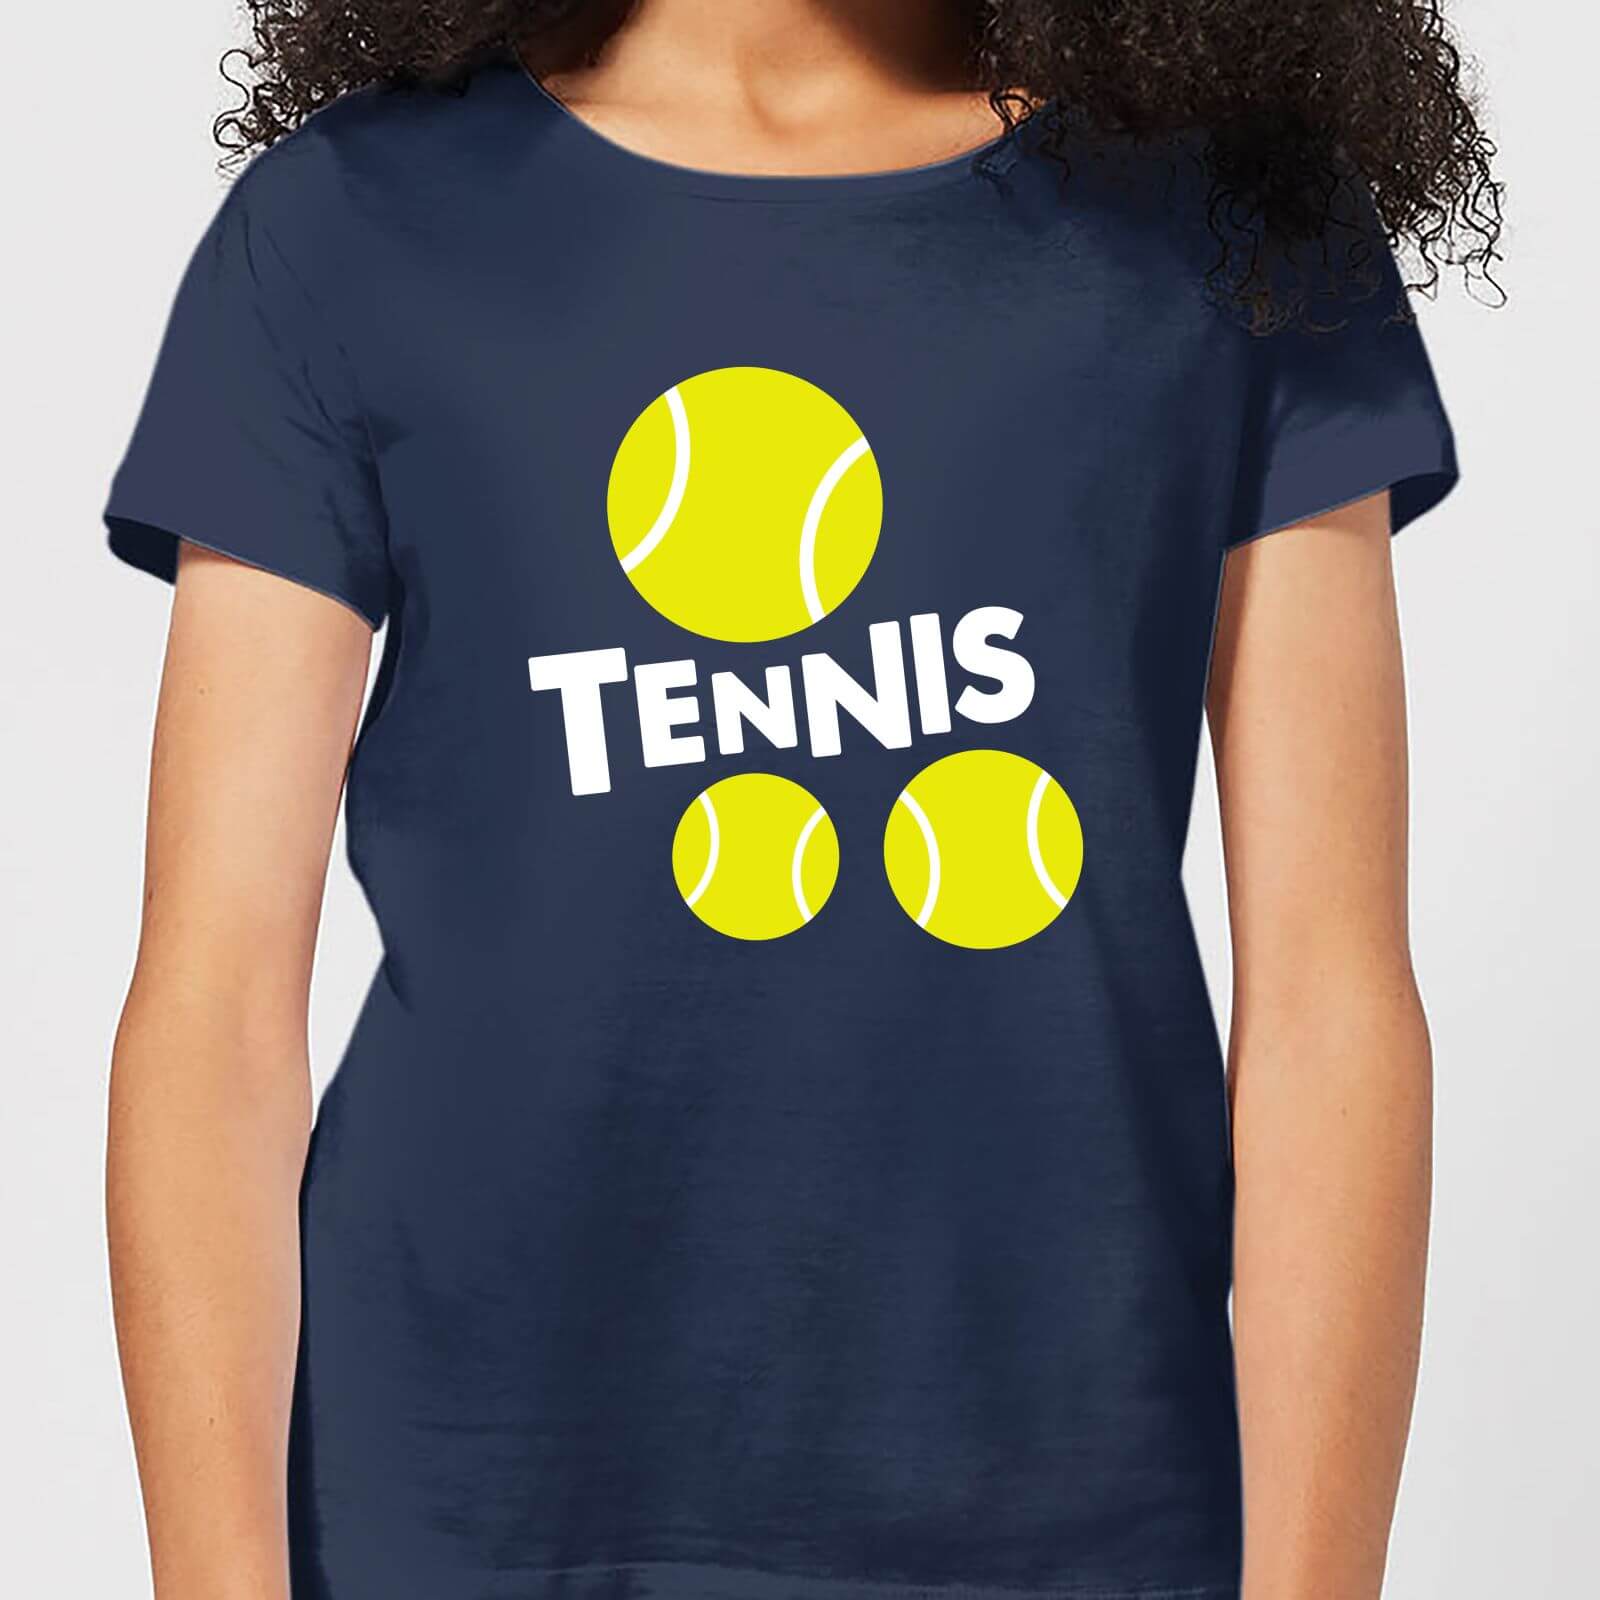 Tennis Balls Womens T-Shirt - Navy - M - Navy